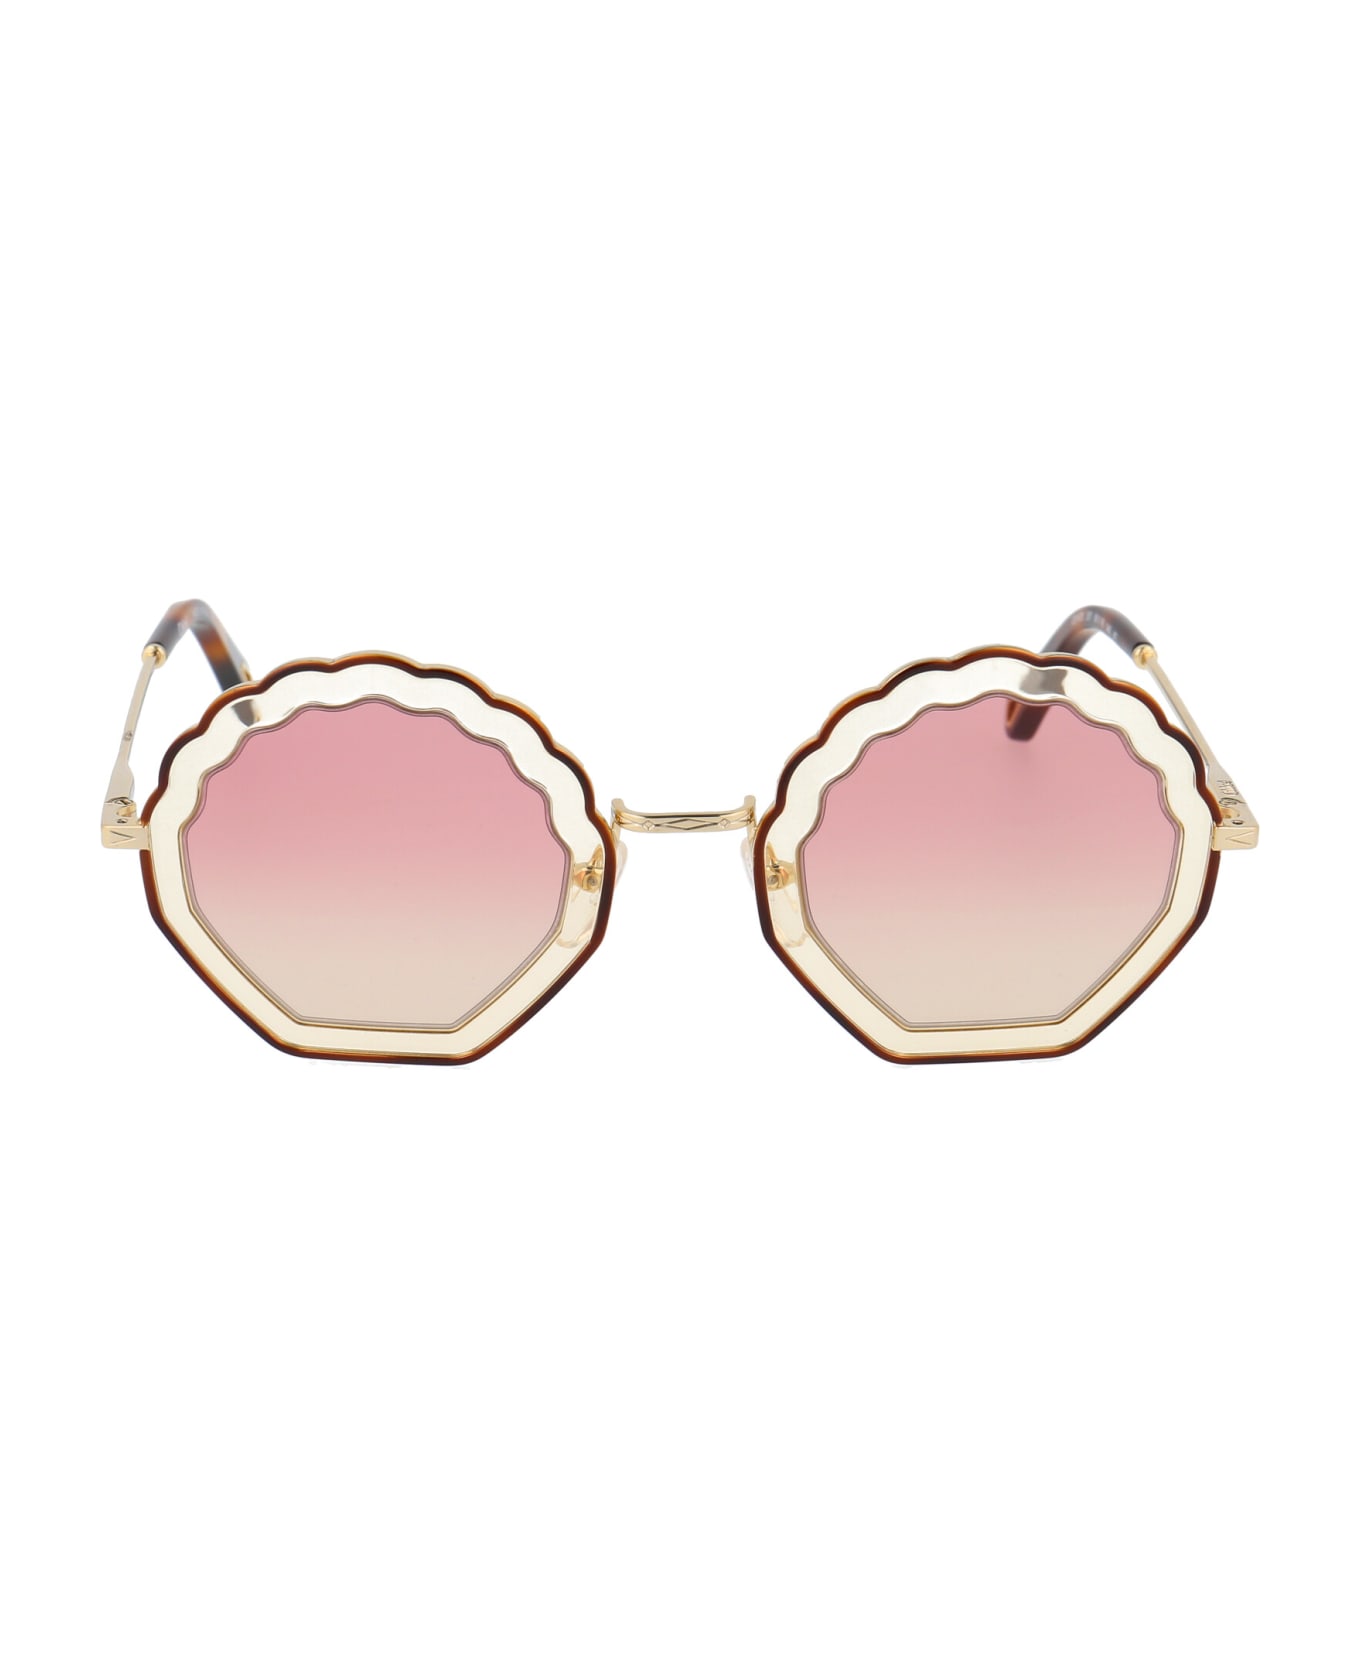 Chloé Eyewear Ce147s Sunglasses - 257 HAVANA SAND/GRADIENT PINK